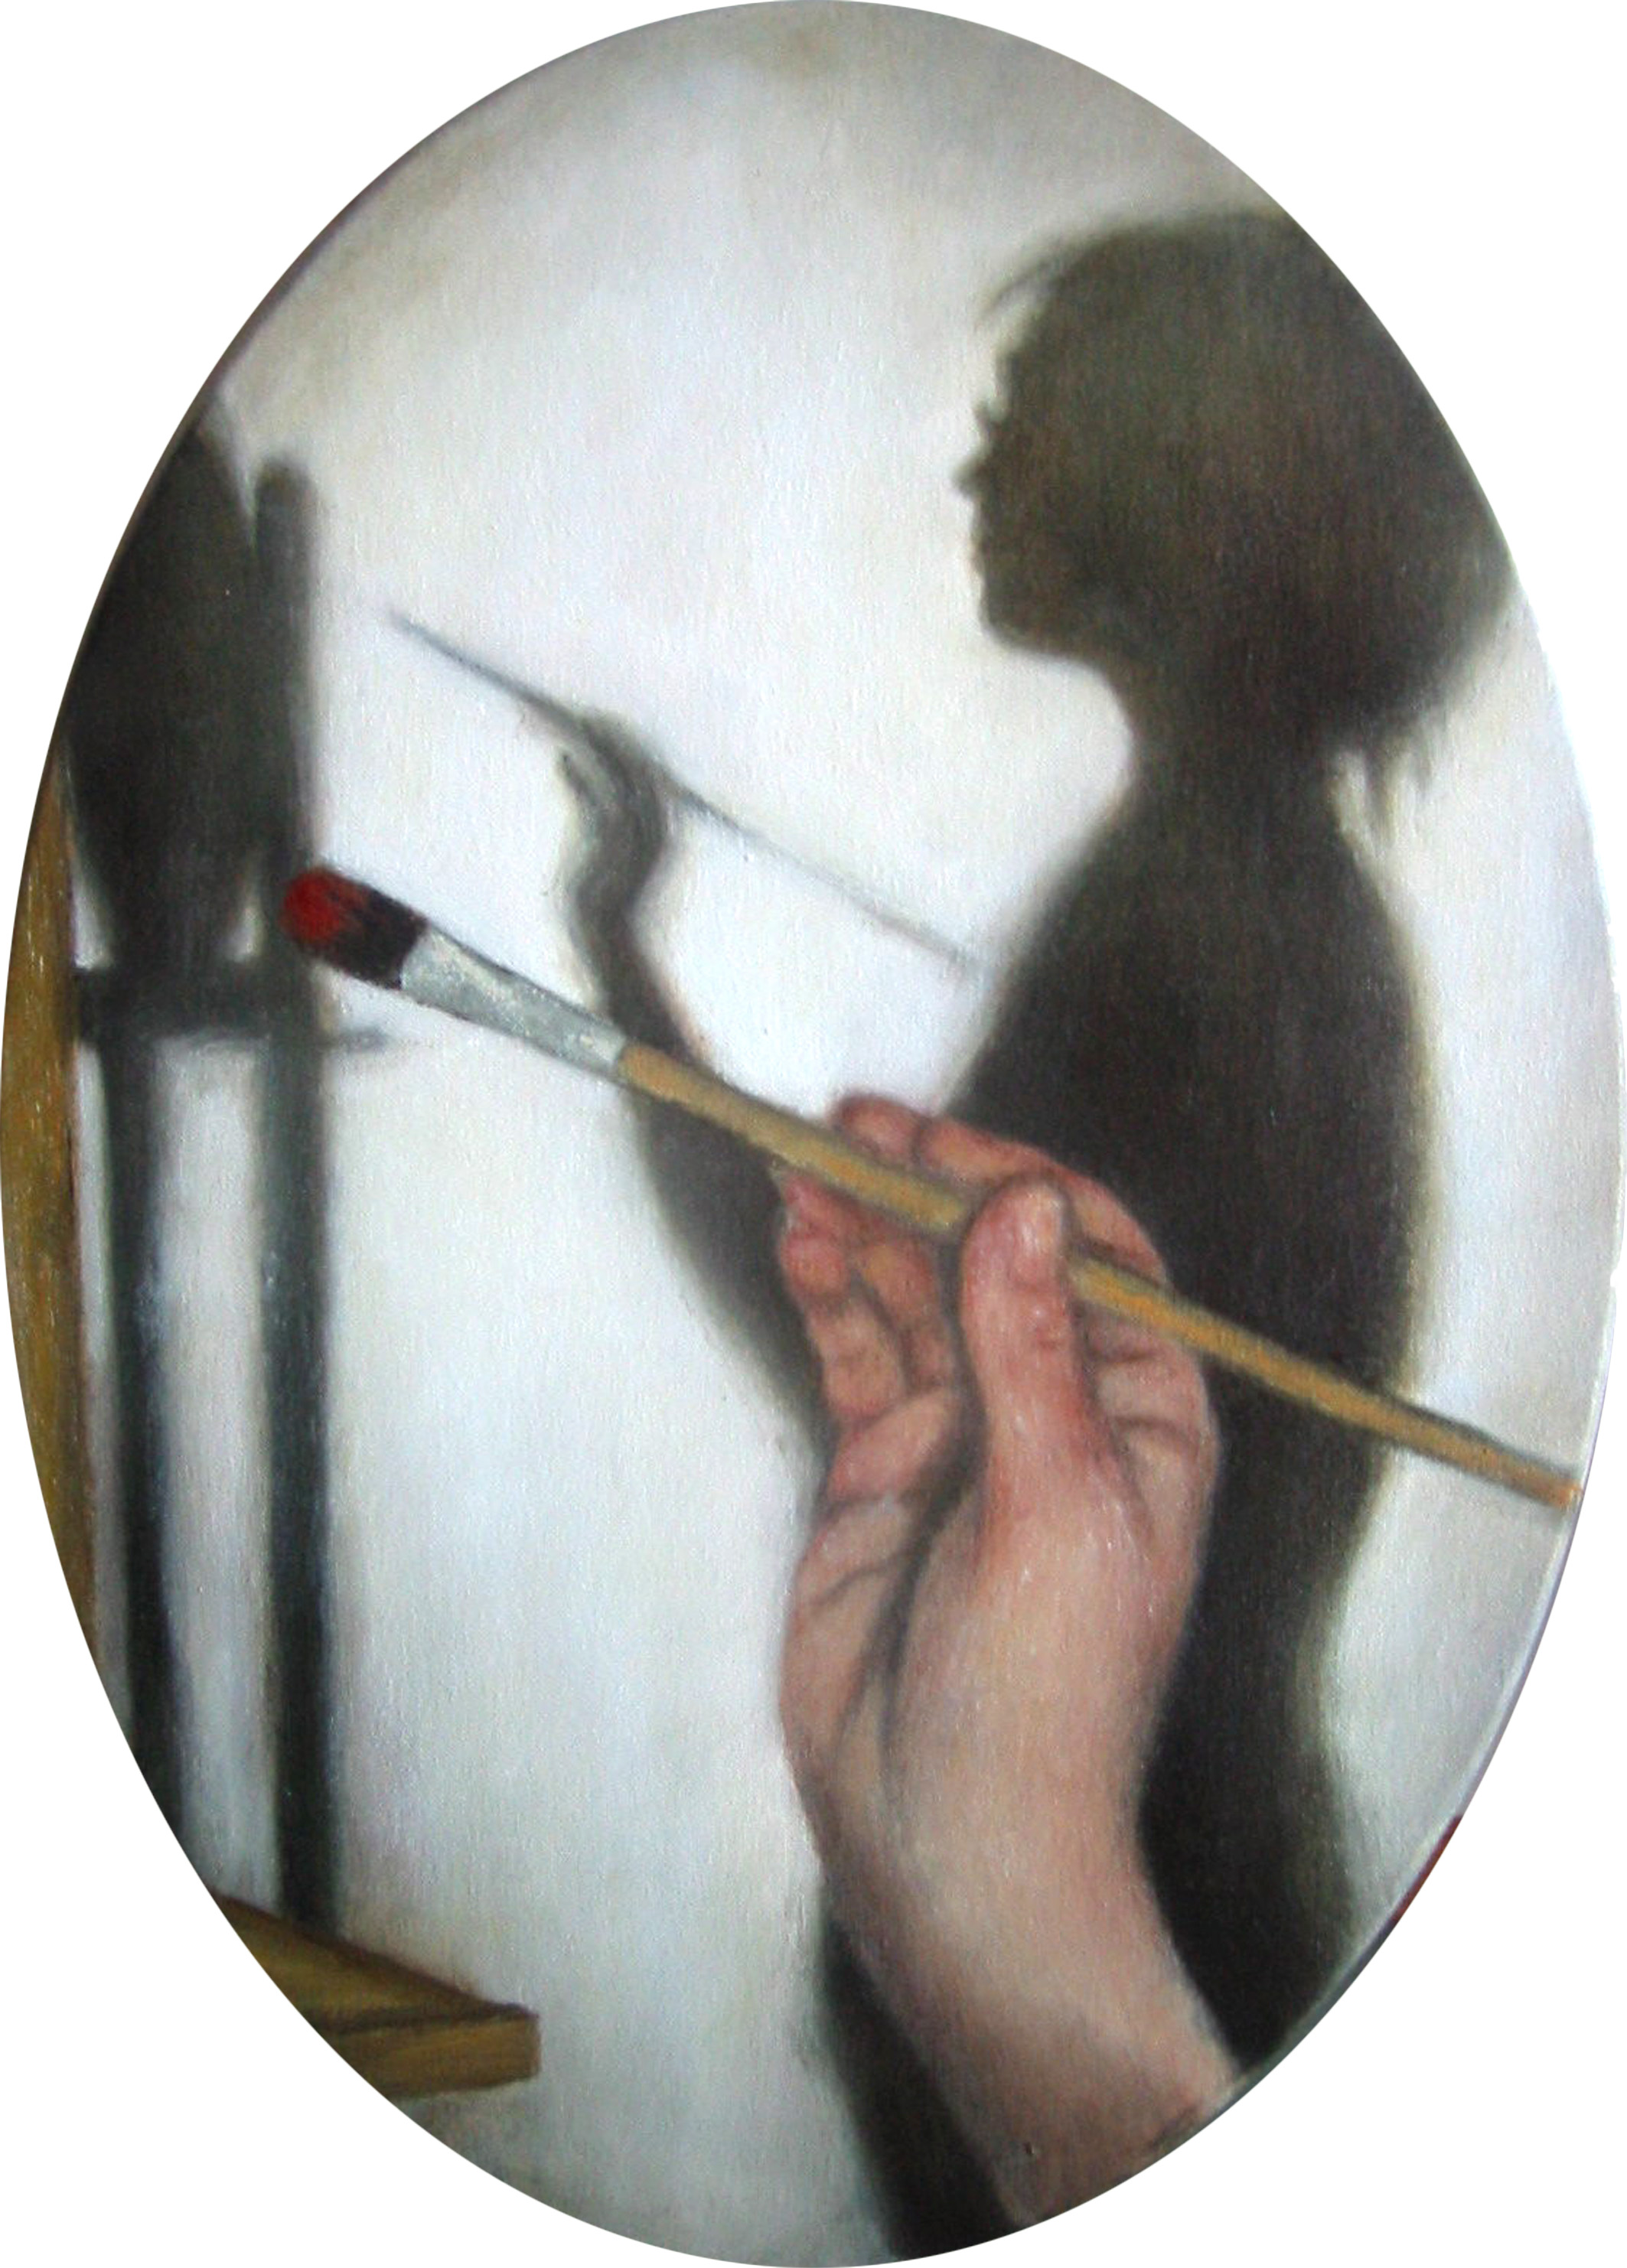   Interior with brush (self-portrait)    Oil on canvas   40 x 30 cm 2006  